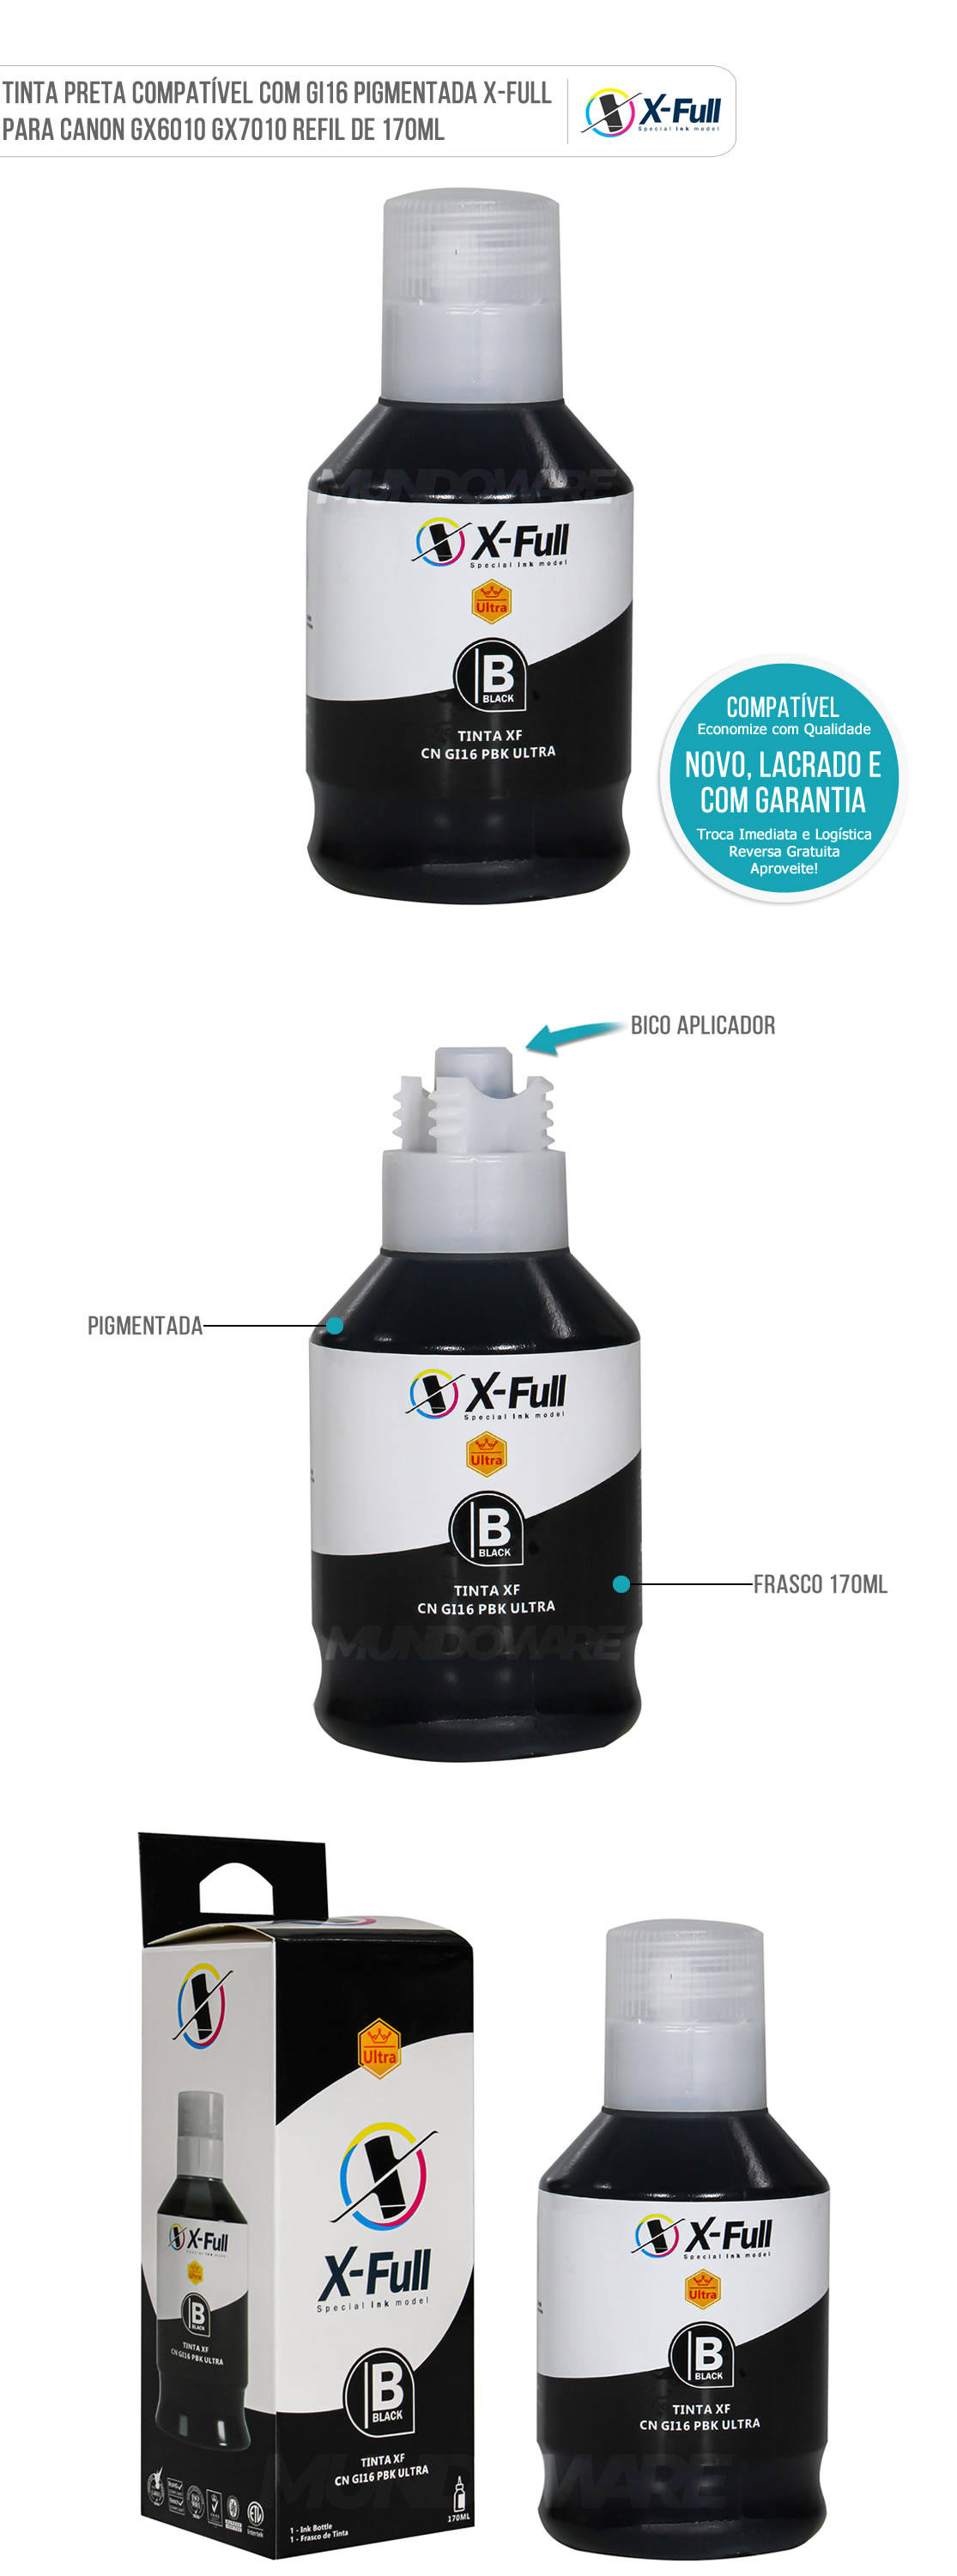 Tinta Preta Pigmentada X-Full Compatível com GI16 GI-16 para Canon GX6010 GX7010 GX-6010 GX-7010 Garrafa de 170ml